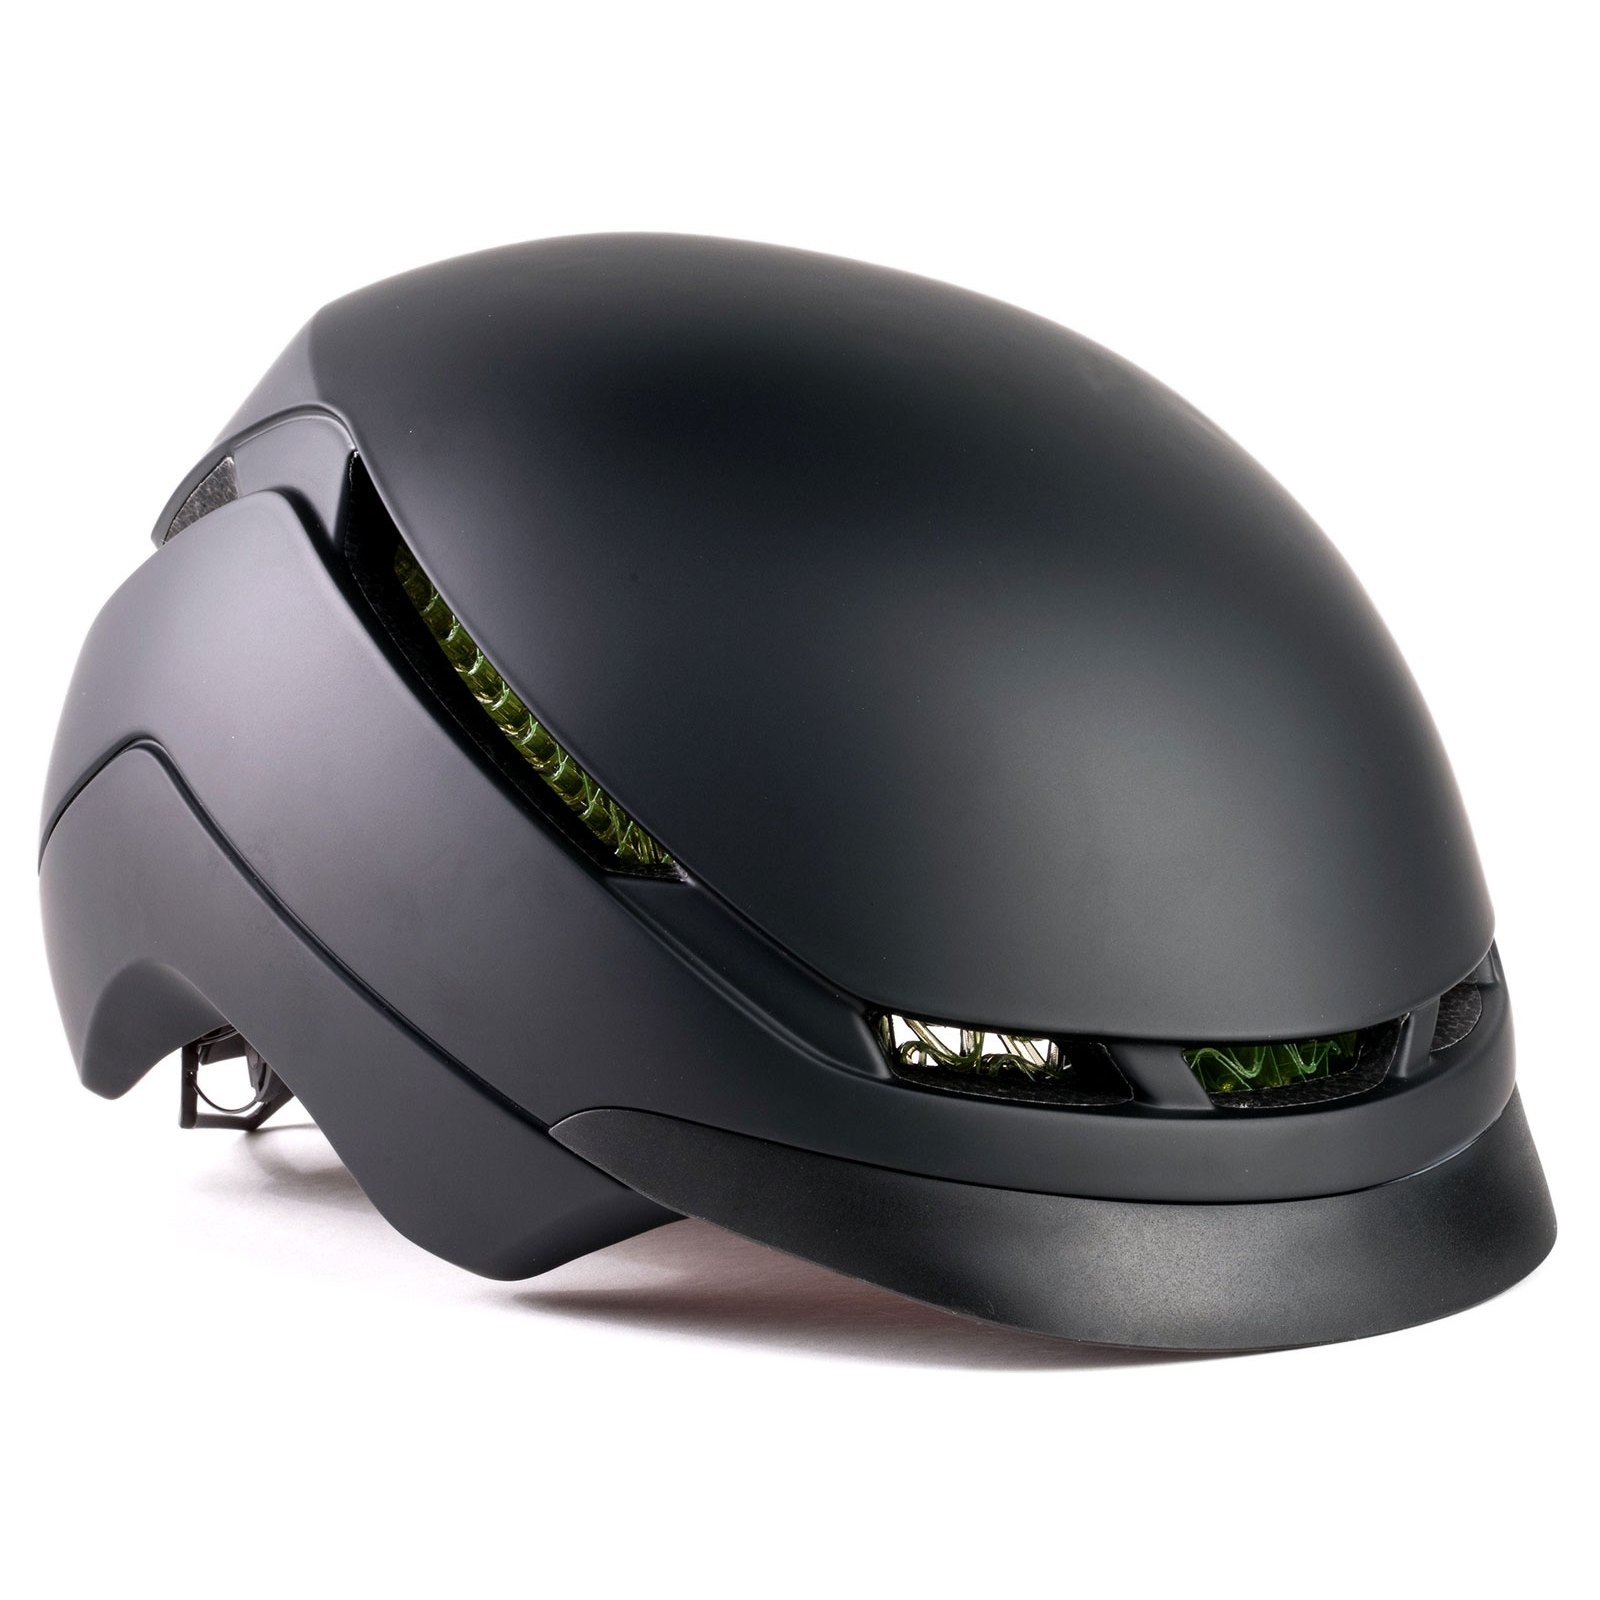 Productfoto van Bontrager Charge WaveCel Commuter E-Bike Helmet - black